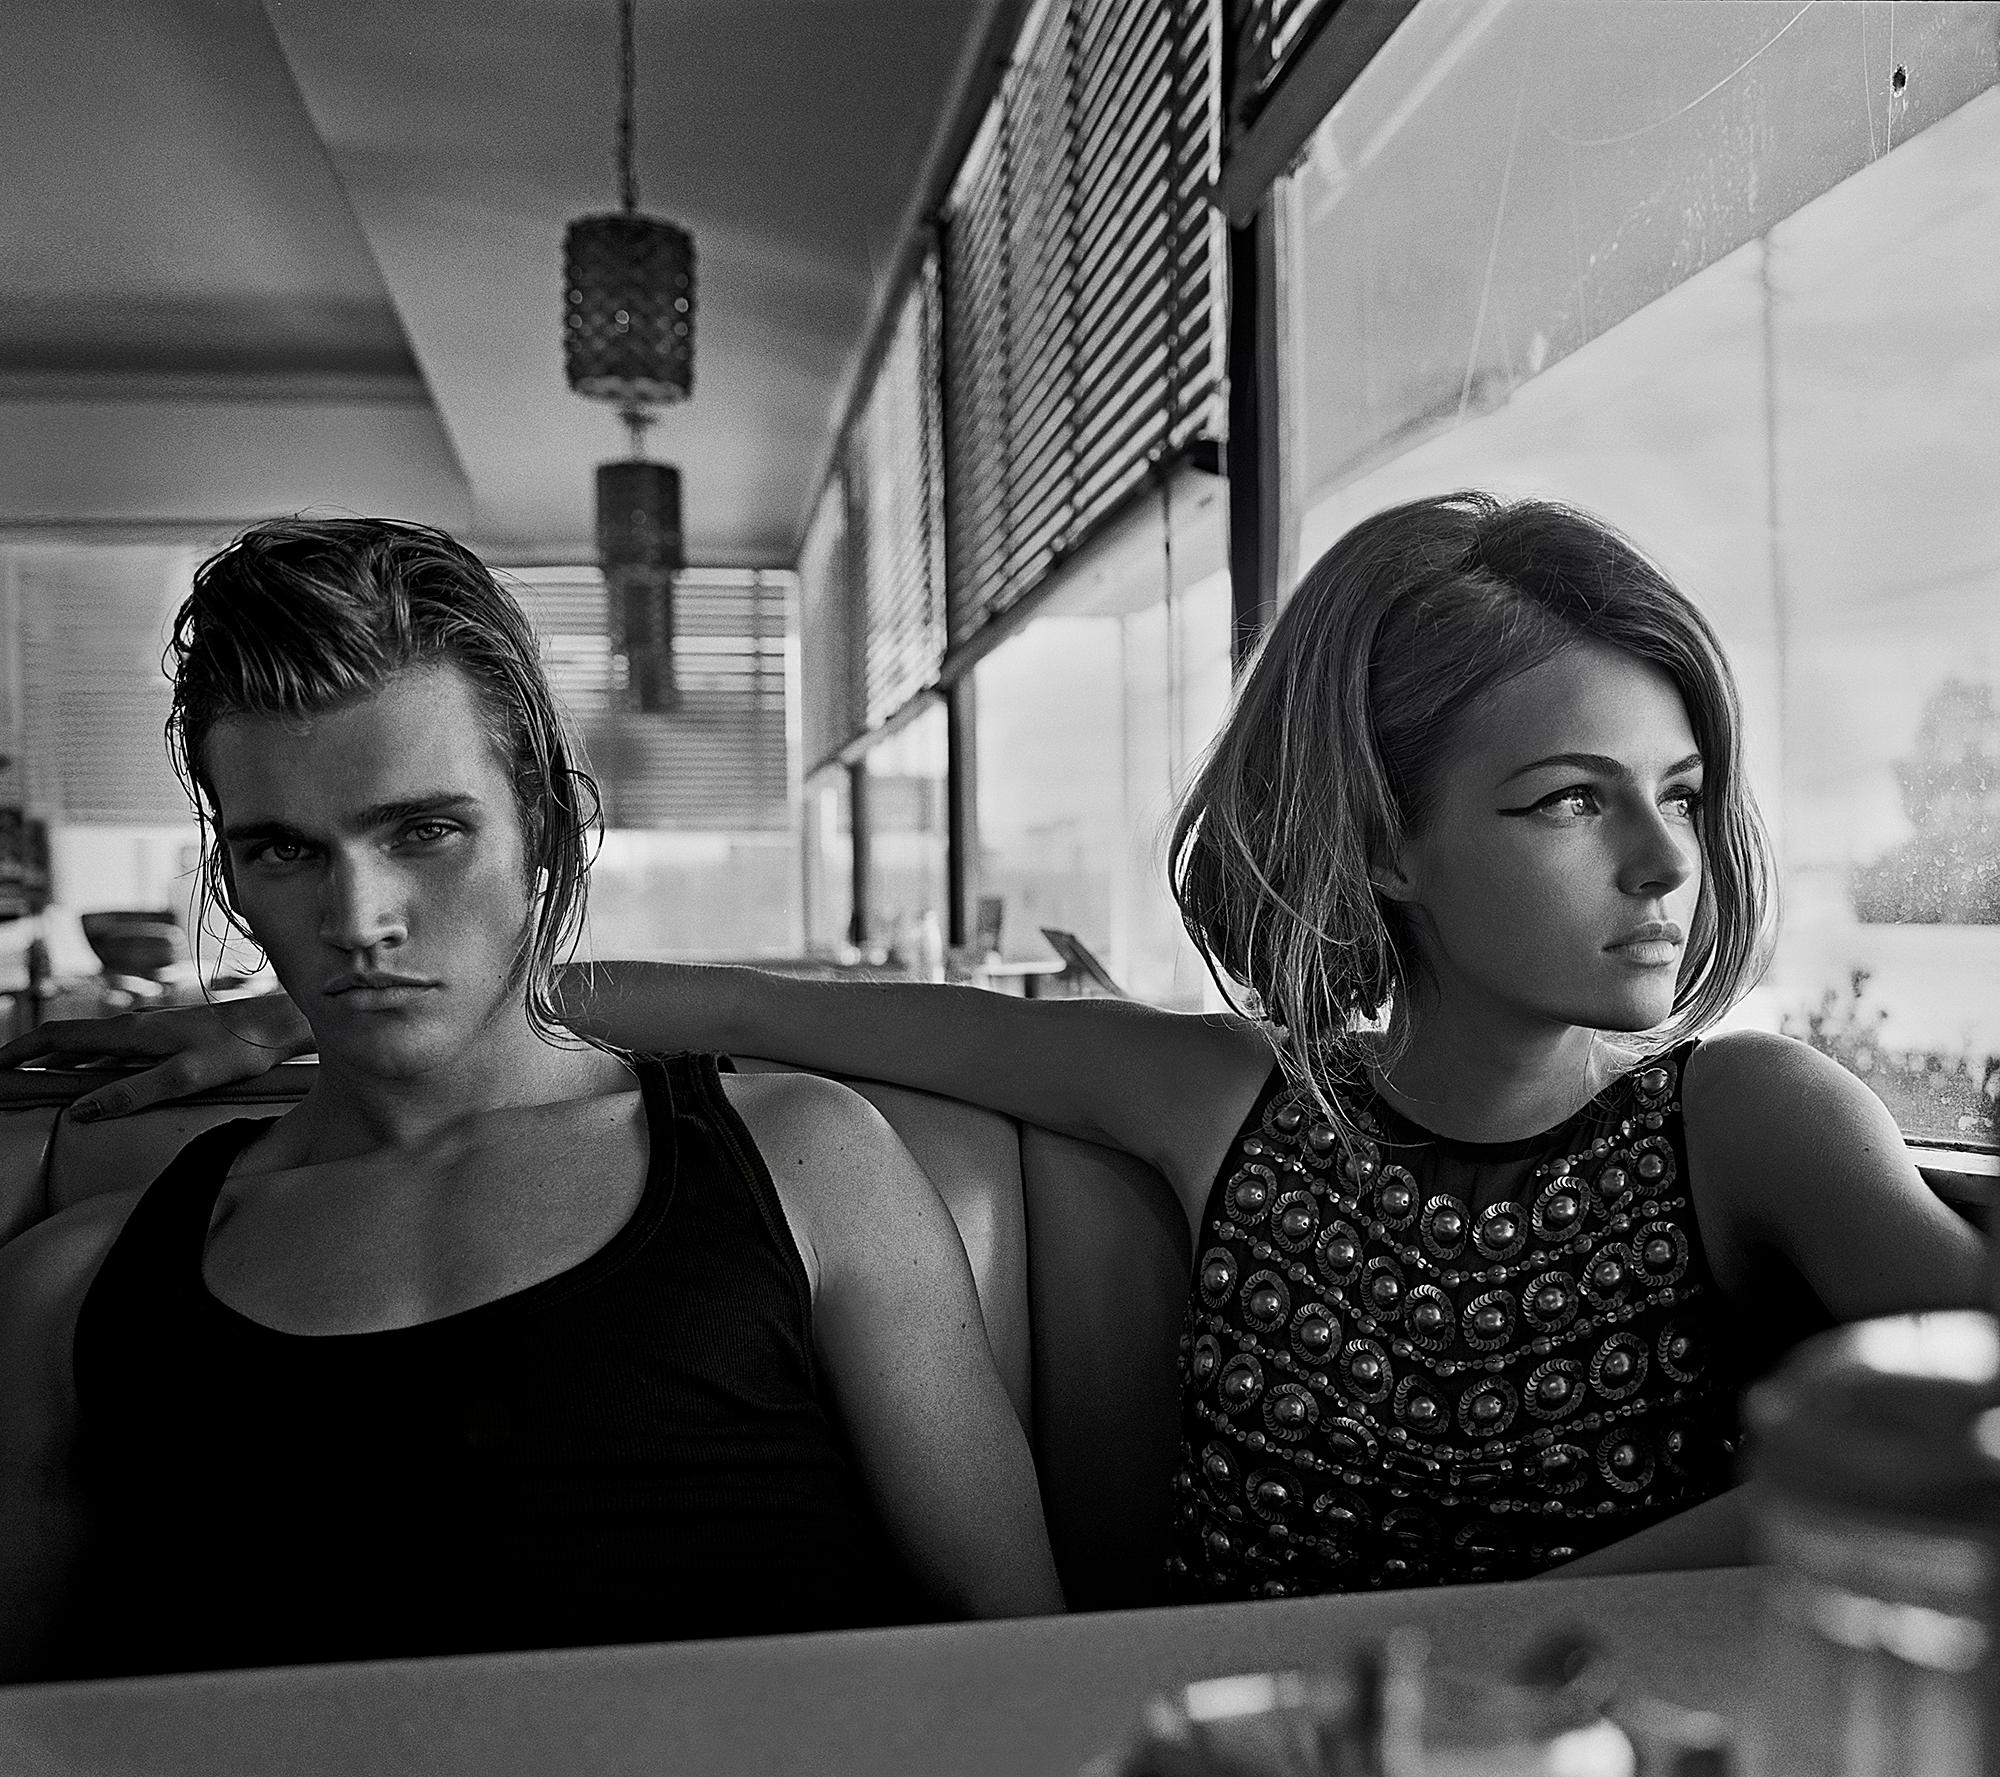 Jacques Olivar Black and White Photograph - Valentina & Niklas, Los Angeles, contemporary, photography, 21st century